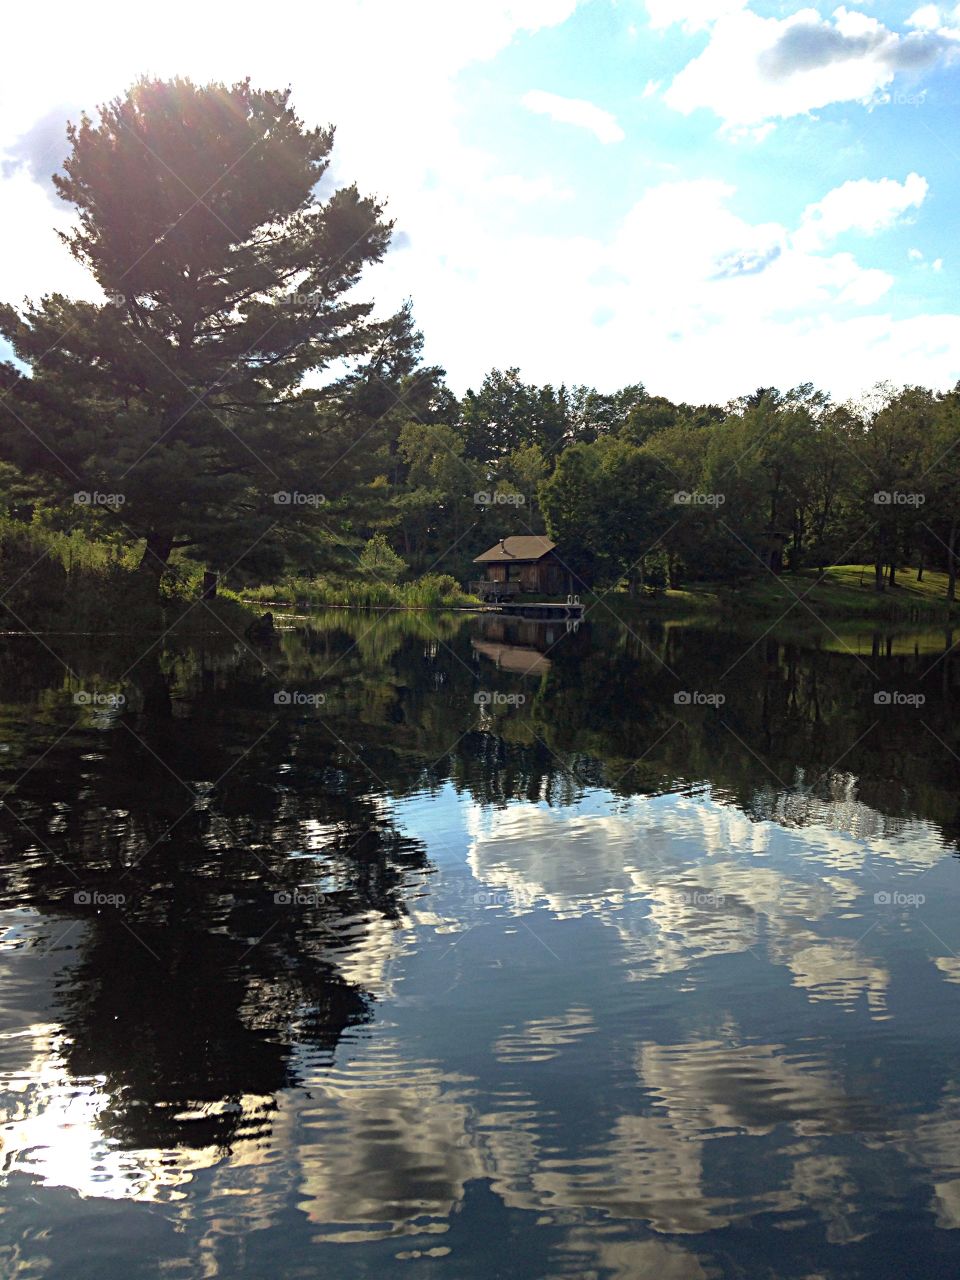 Summer pond. Neighbors pond in August